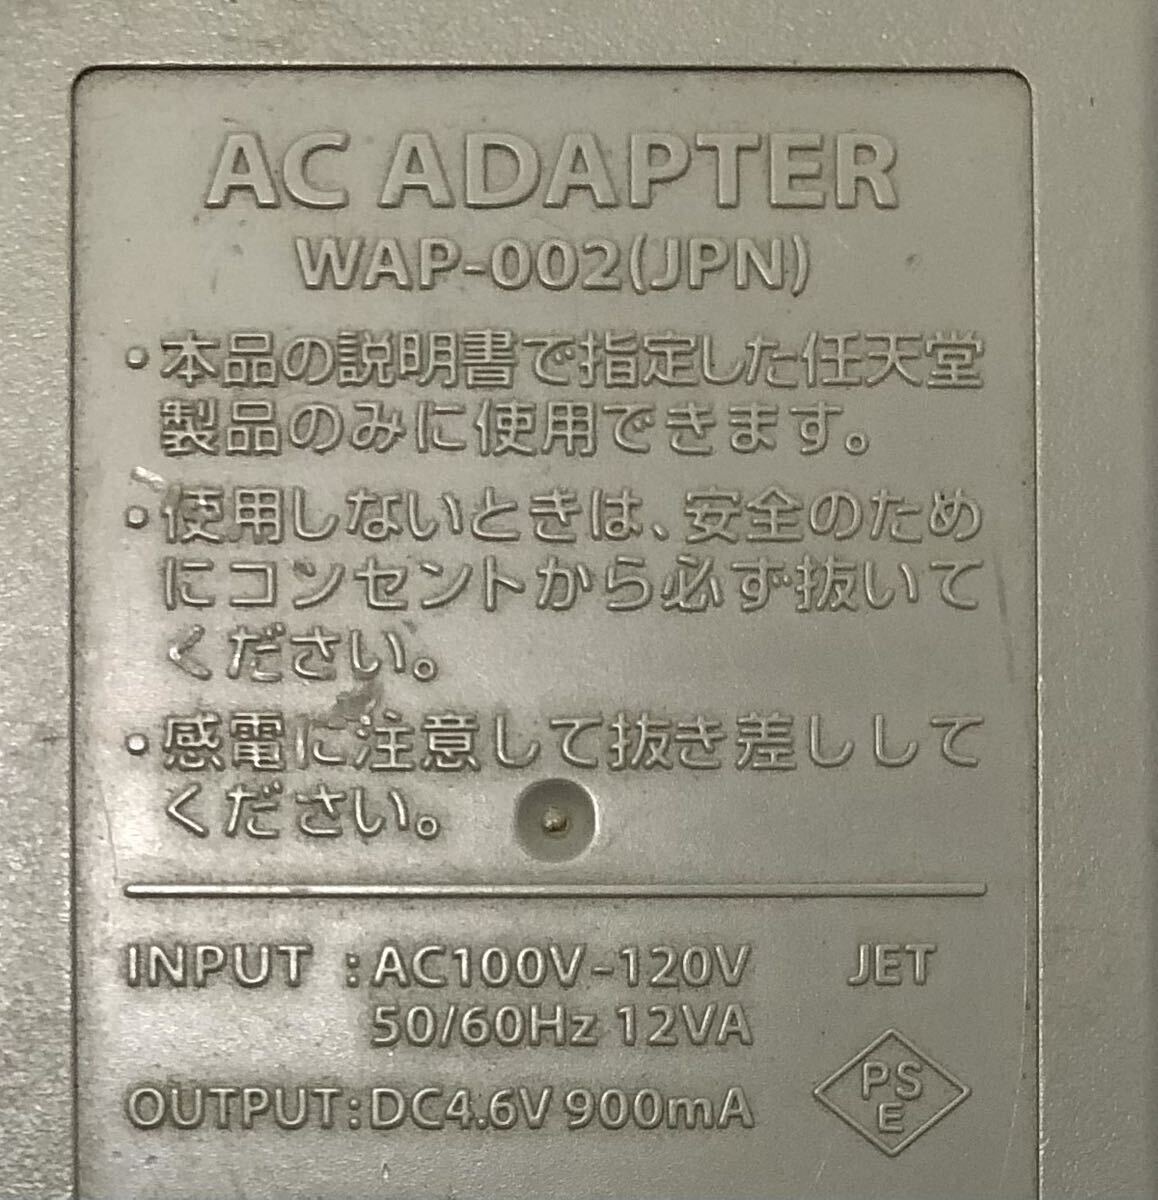  nintendo 3DS AC adaptor WAP-002(JPN) large amount 28 piece summarize operation not yet verification Junk Nintendos Lee ti-es3DS LL new 3DS charger 